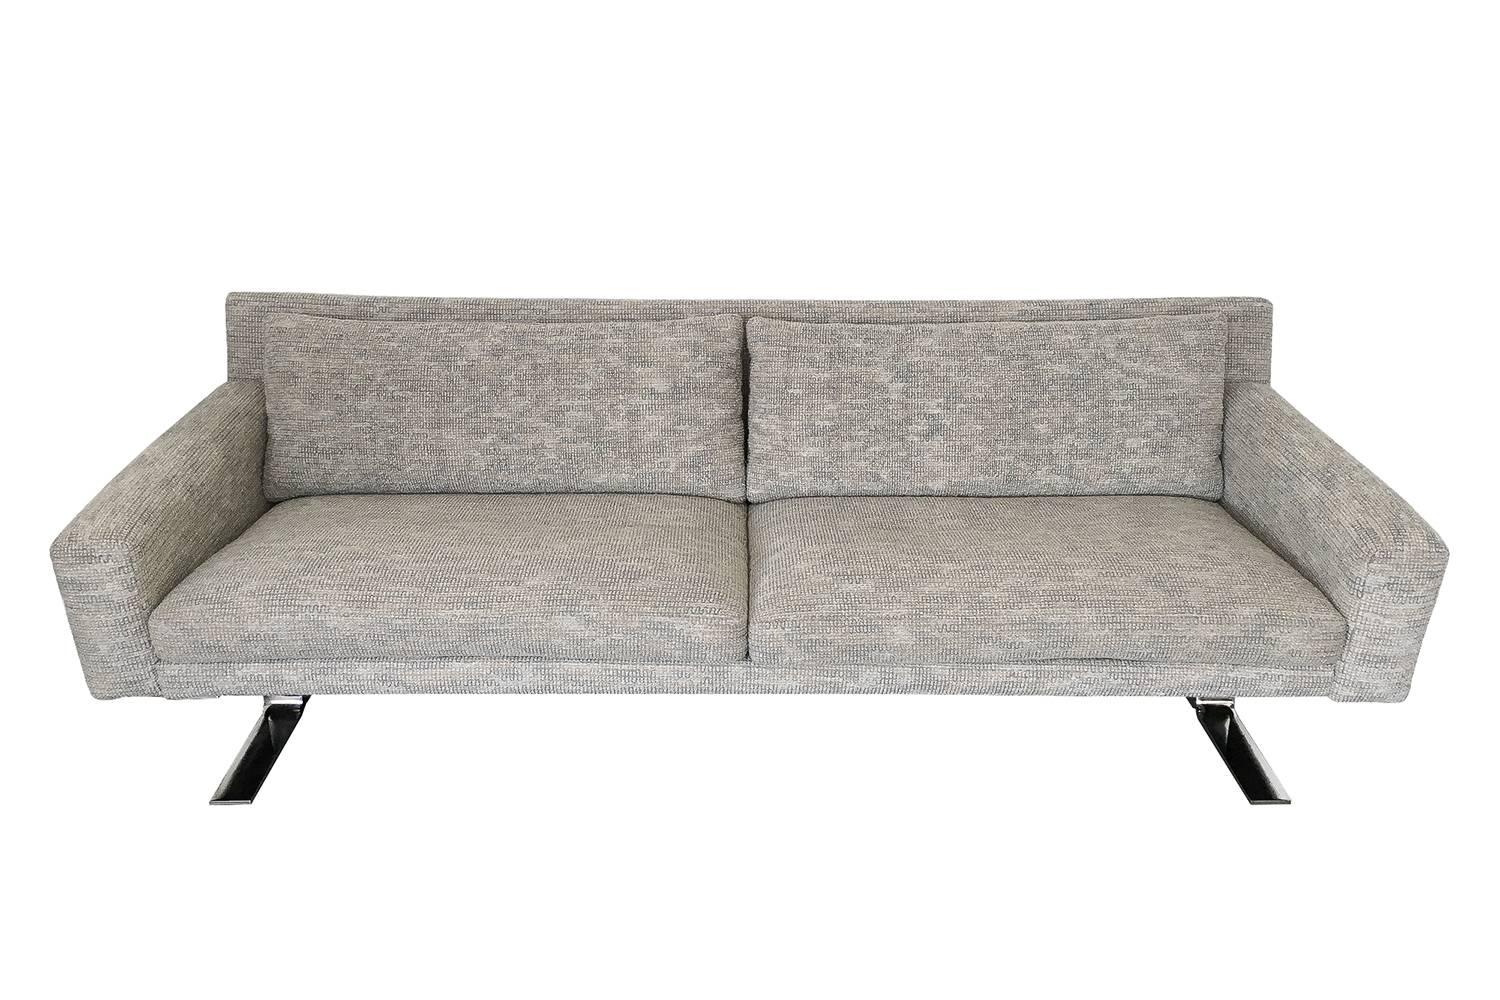 Pair of sleek chrome leg sofas by Erik Ole Jorgensen for DUX Furniture. These sofas feature chrome-plated 3